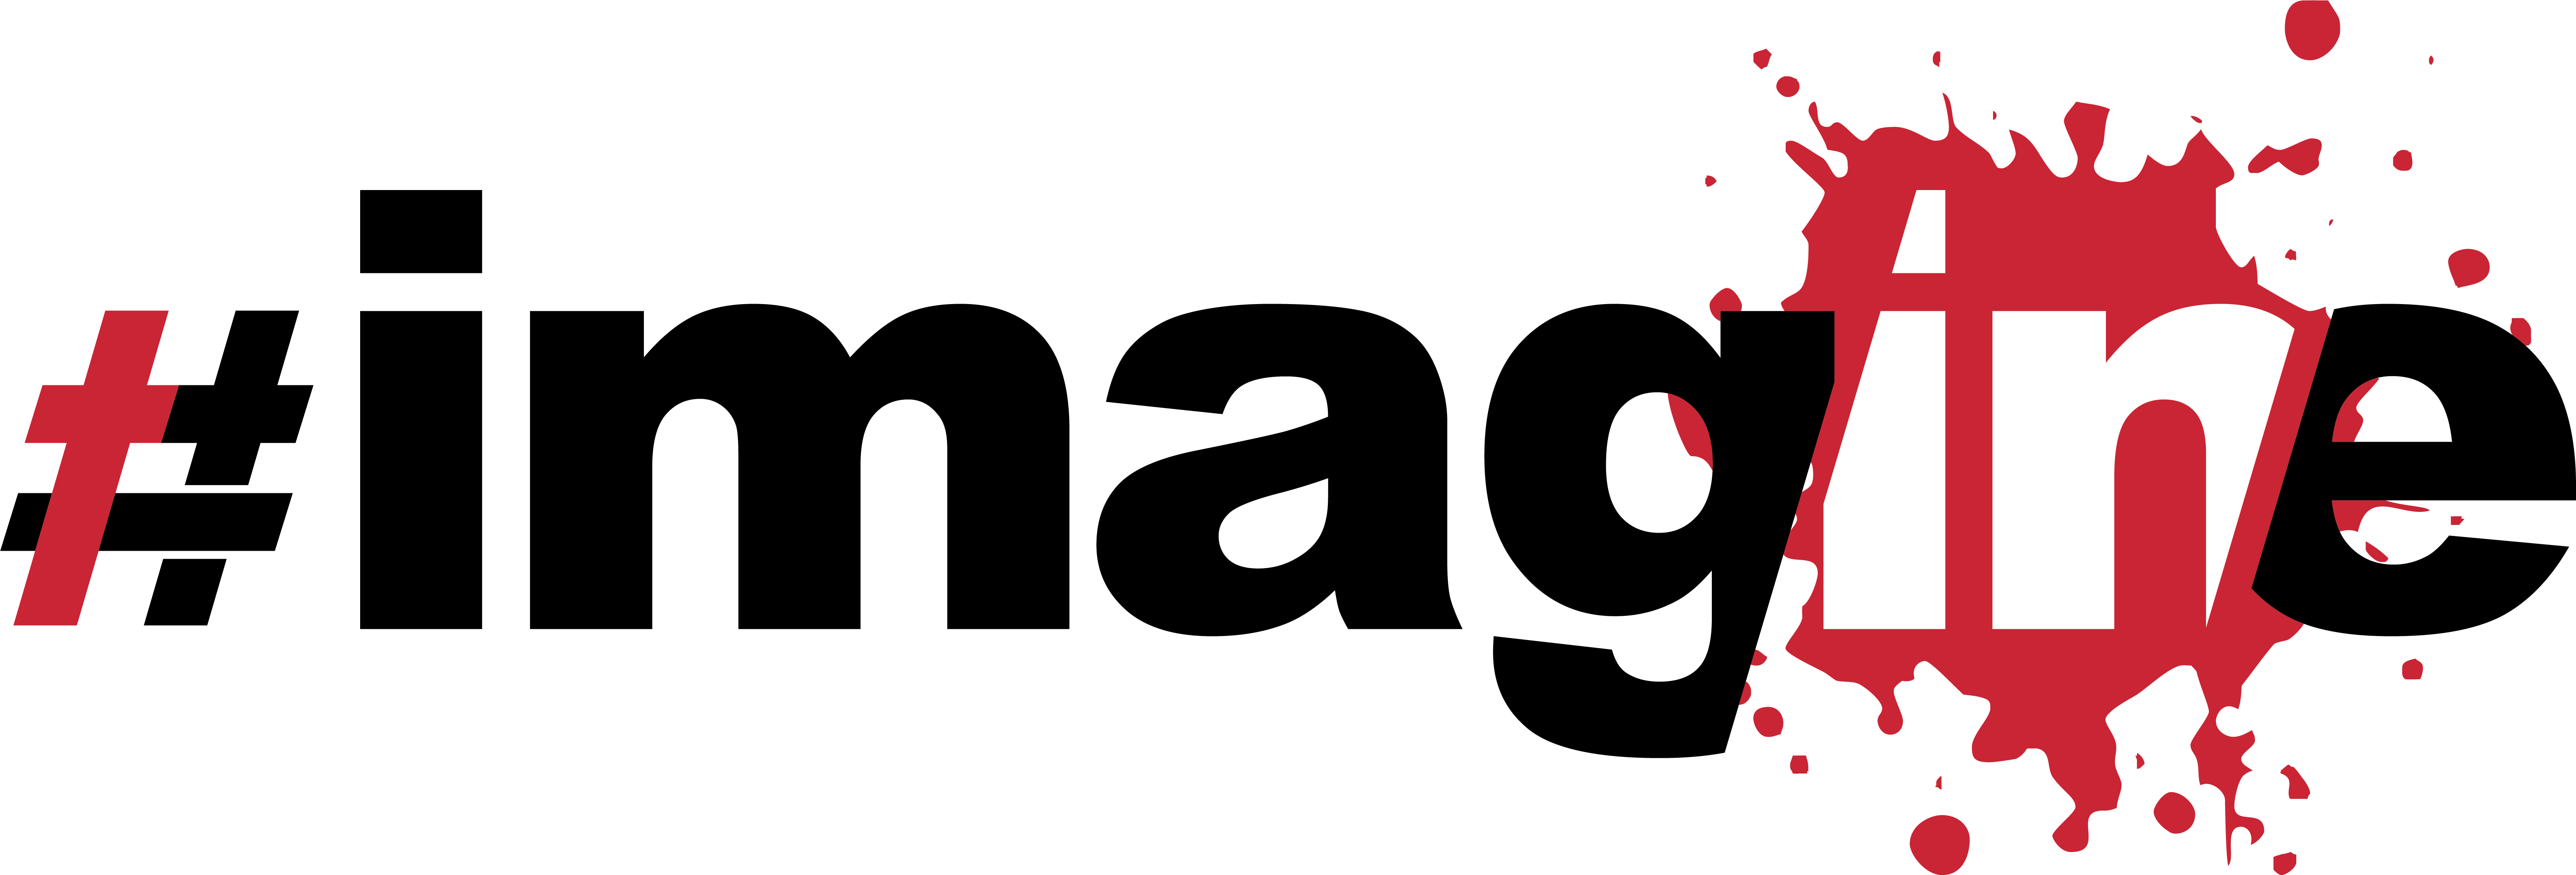 Imagine Logo - Home - Hashtag Imagine